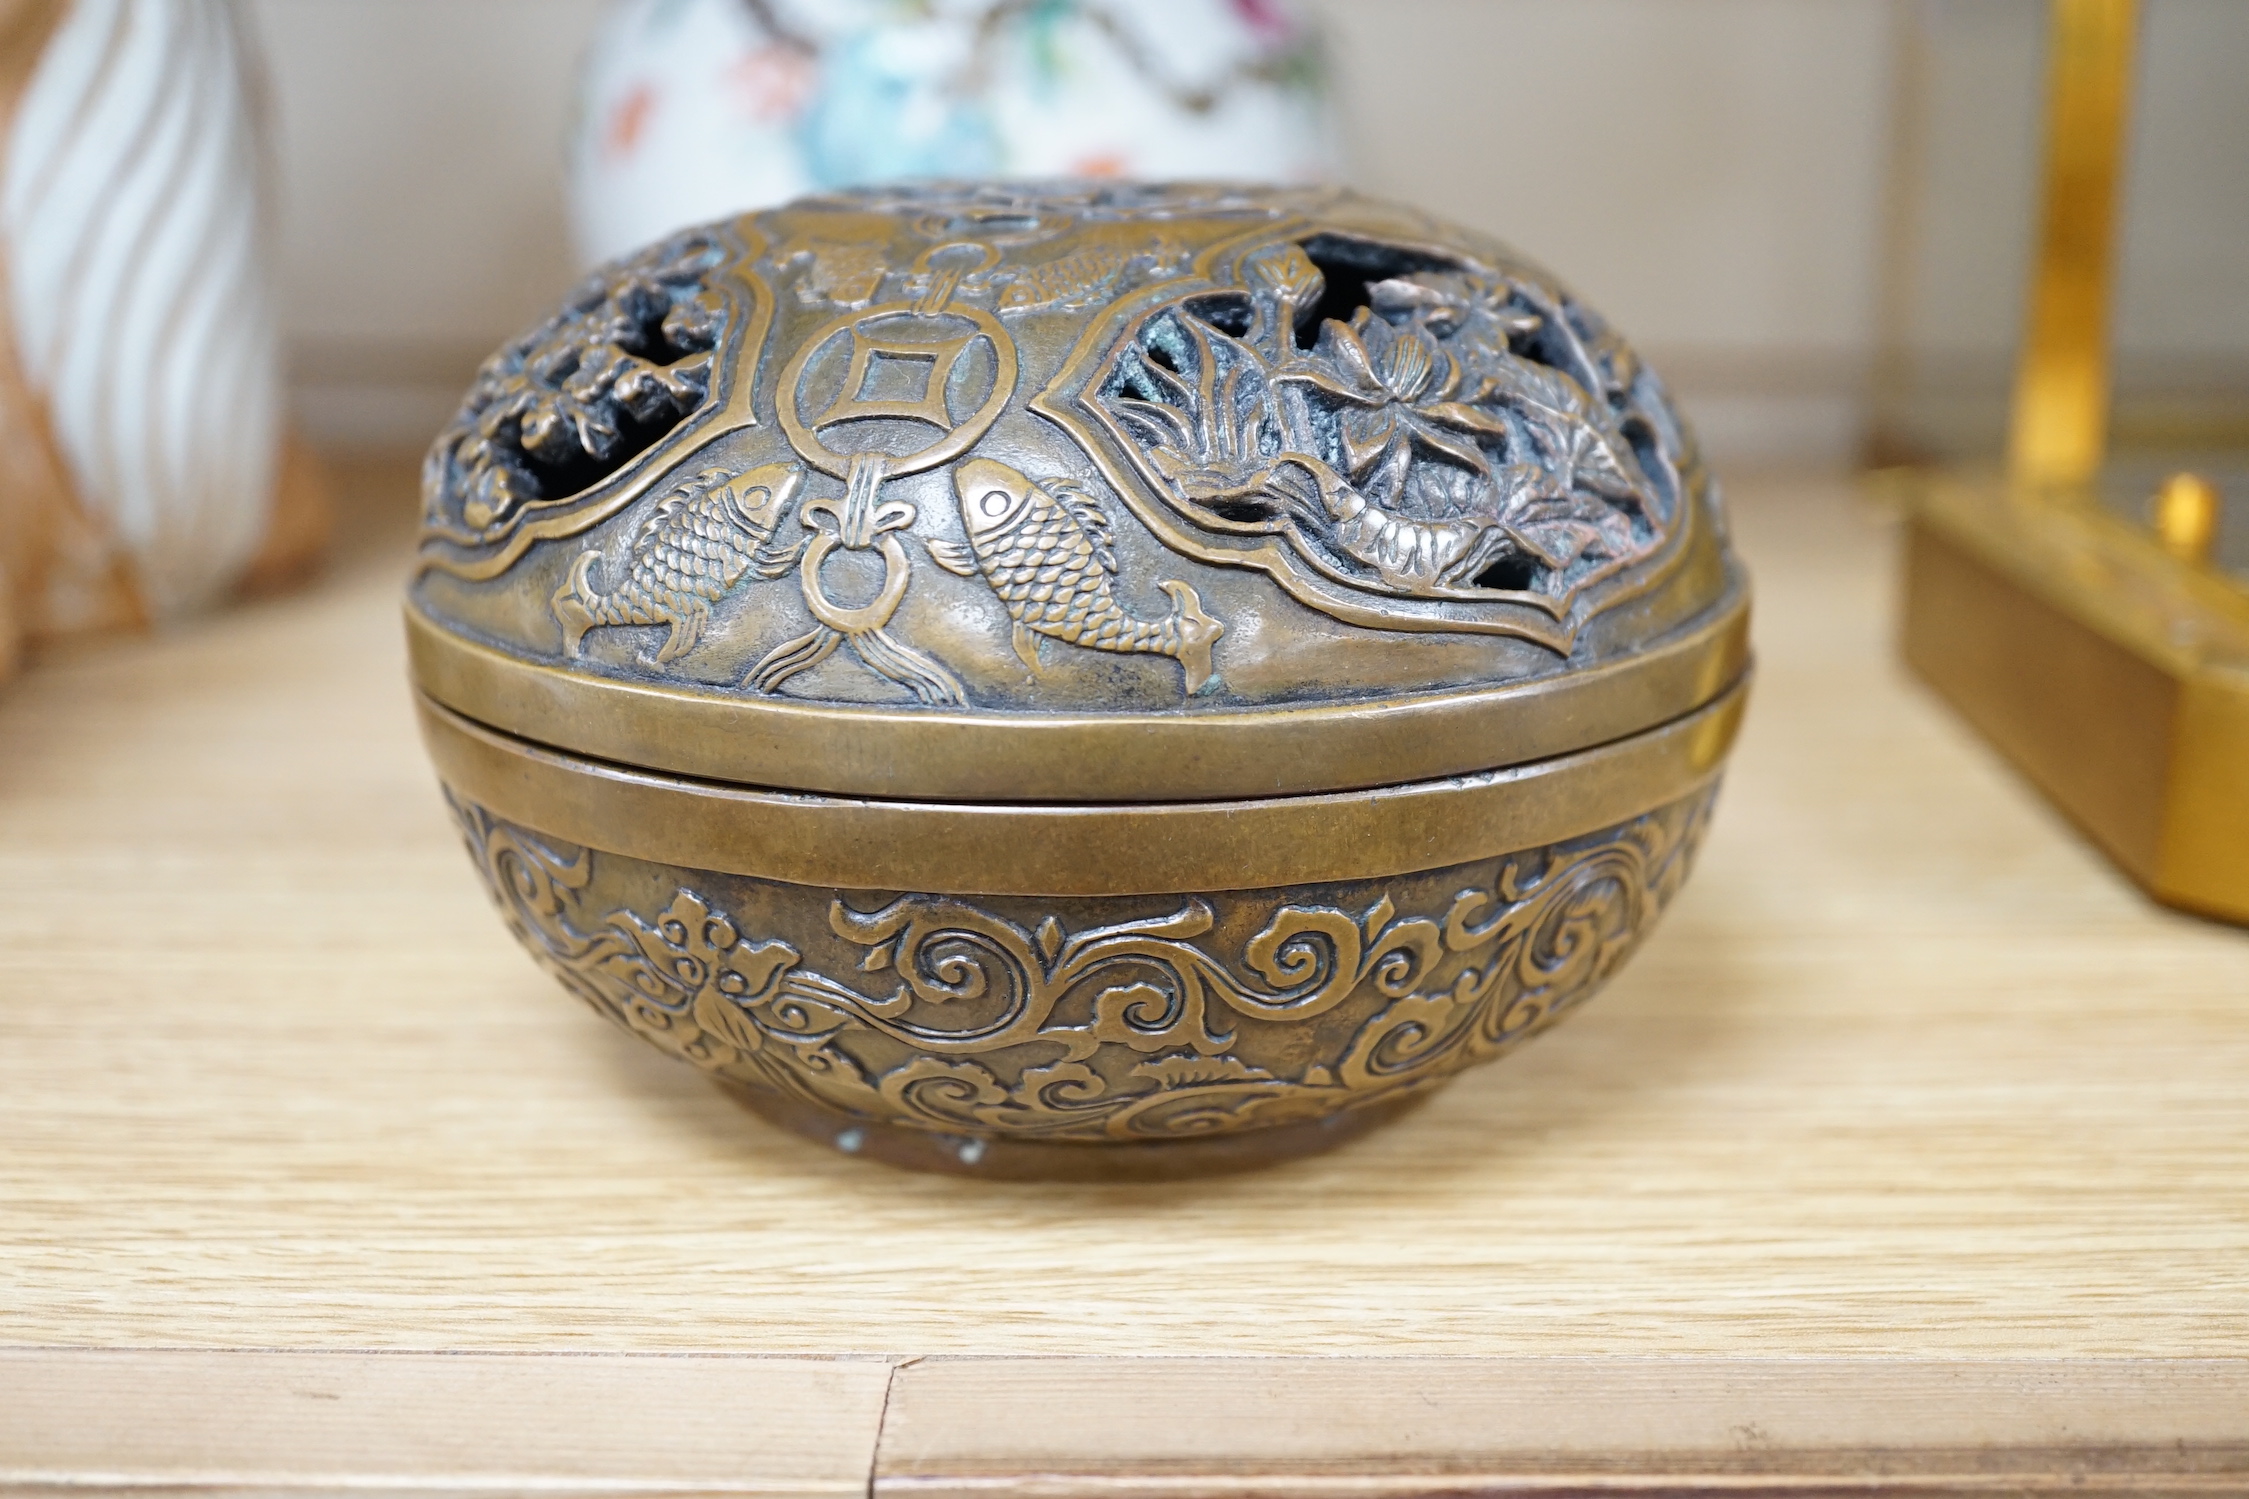 A Chinese circular carved bronze censer, 13.5cm diameter